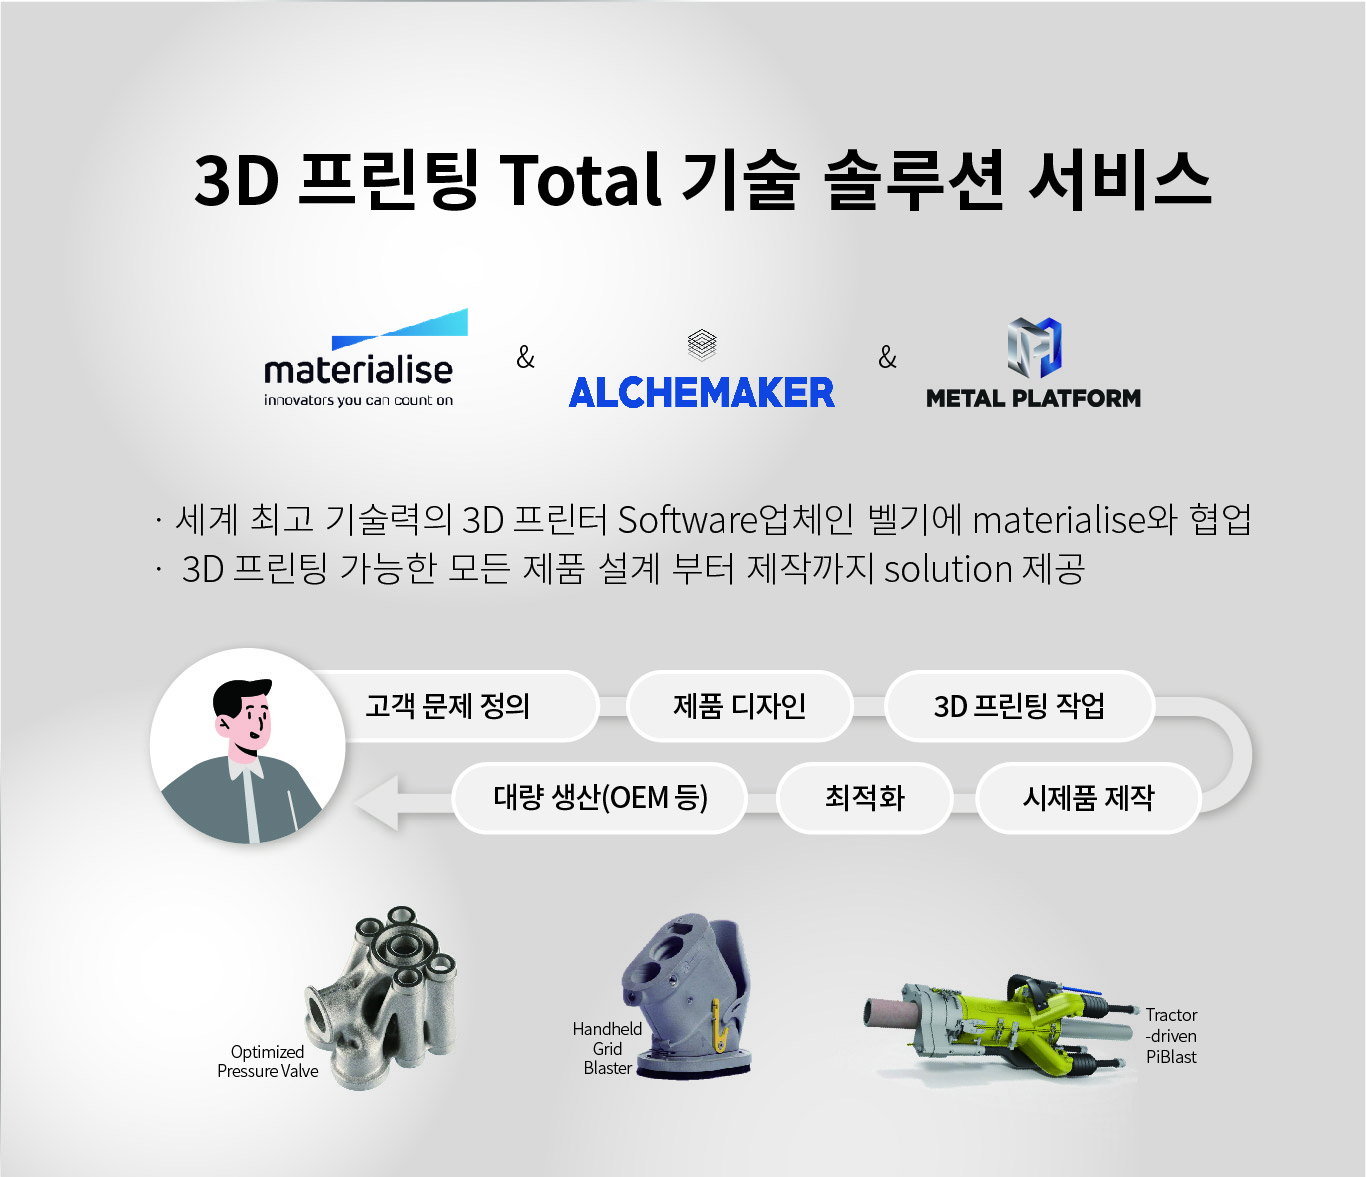 3D 프린팅 Total 기술 솔루션 서비스